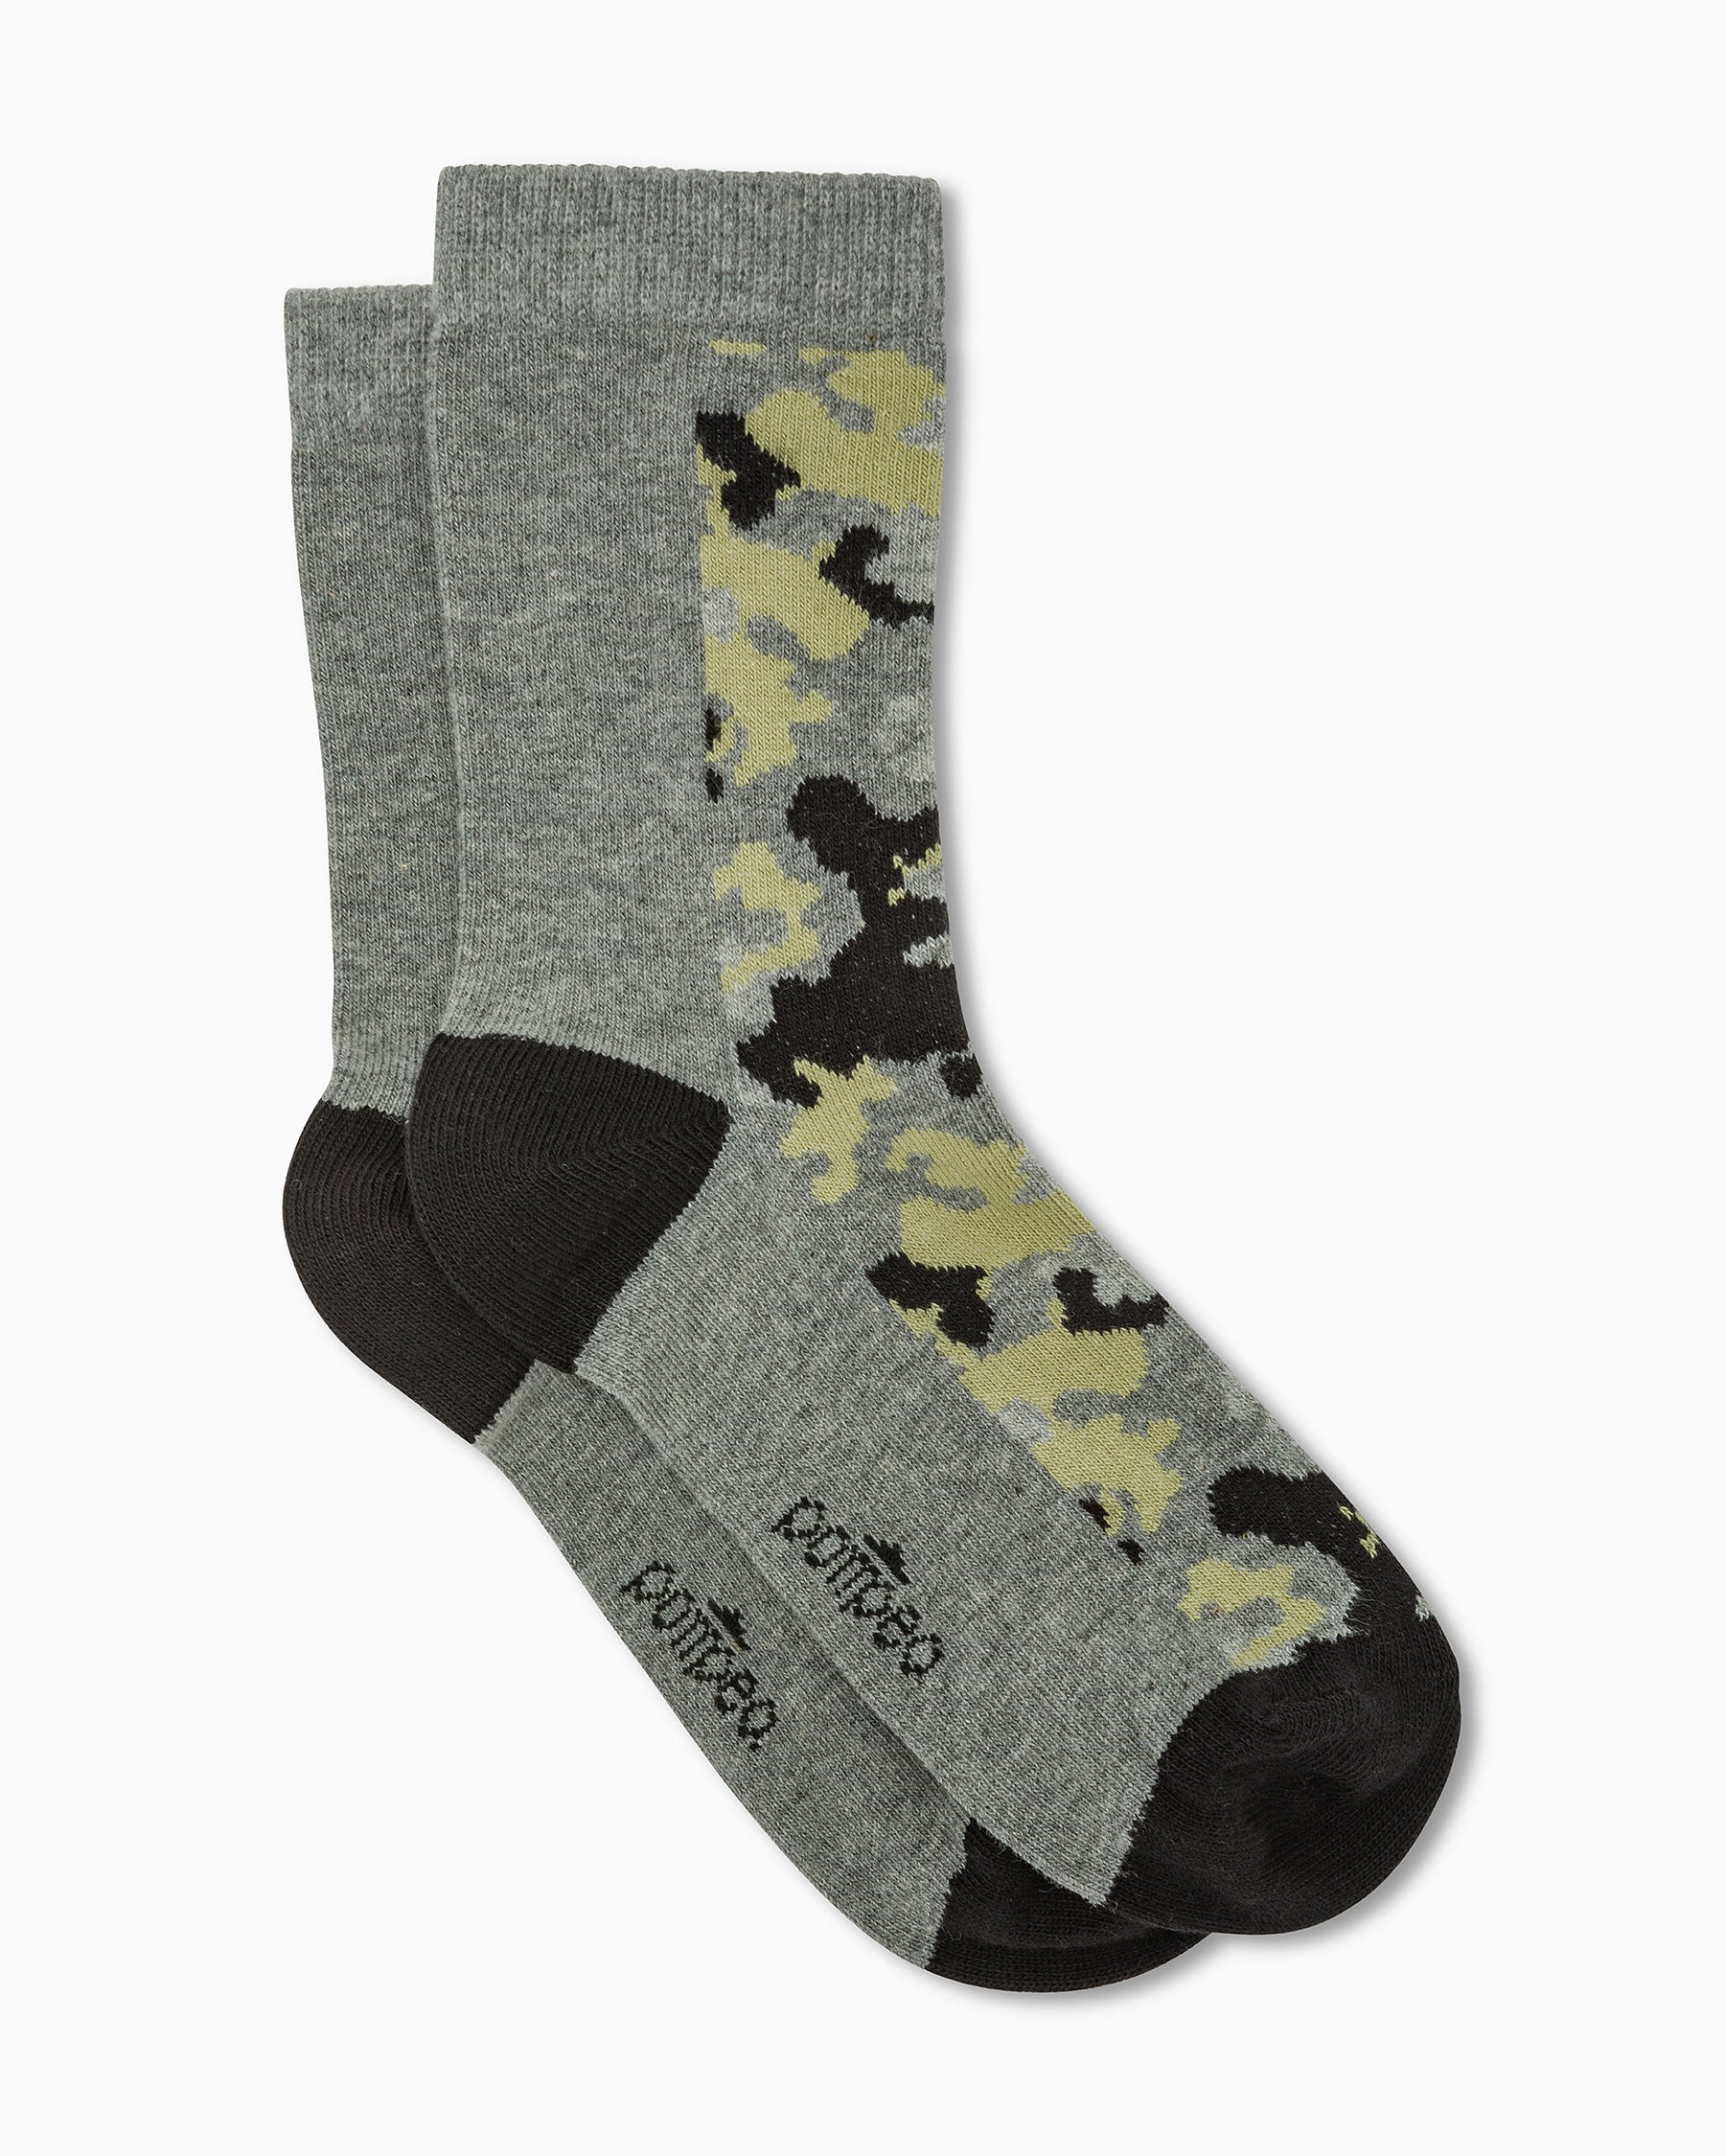 Samuel boys’ sock with camouflage motif